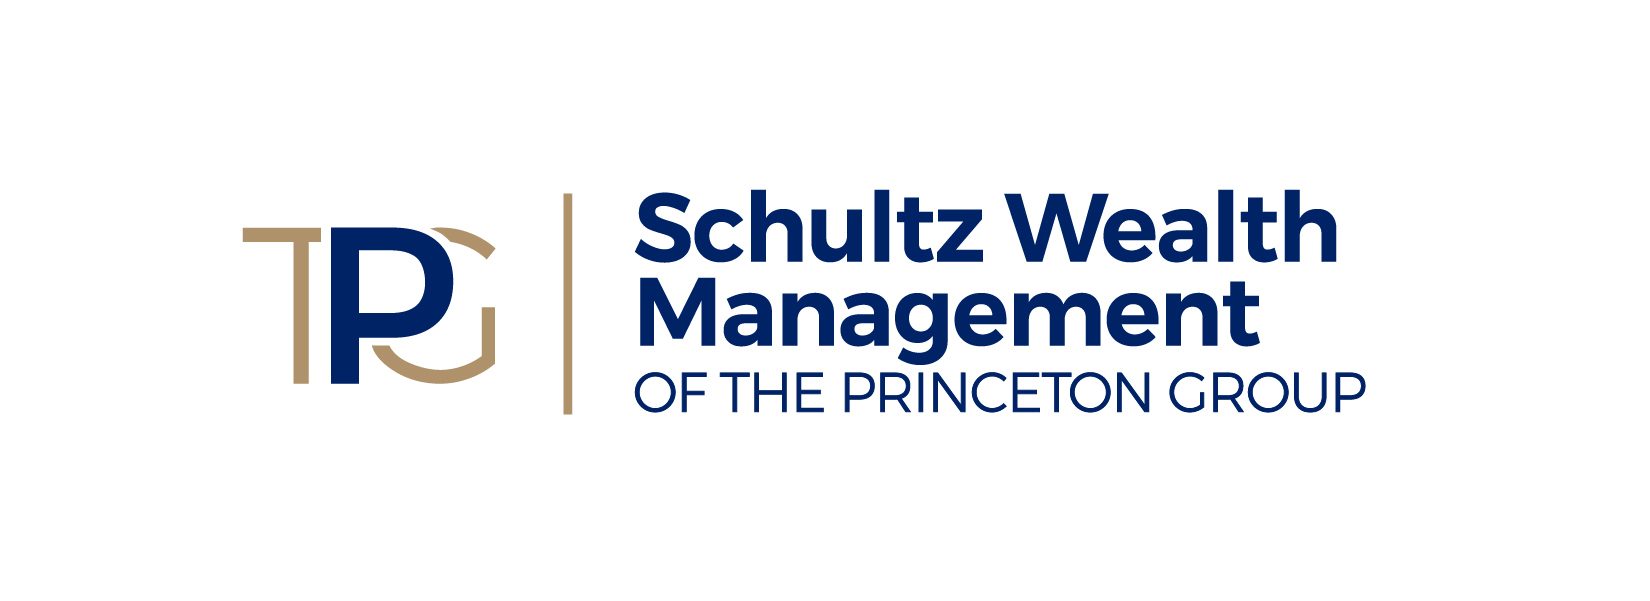 WFA-PG-3118_Sub-Brand logos-Schultz.jpg